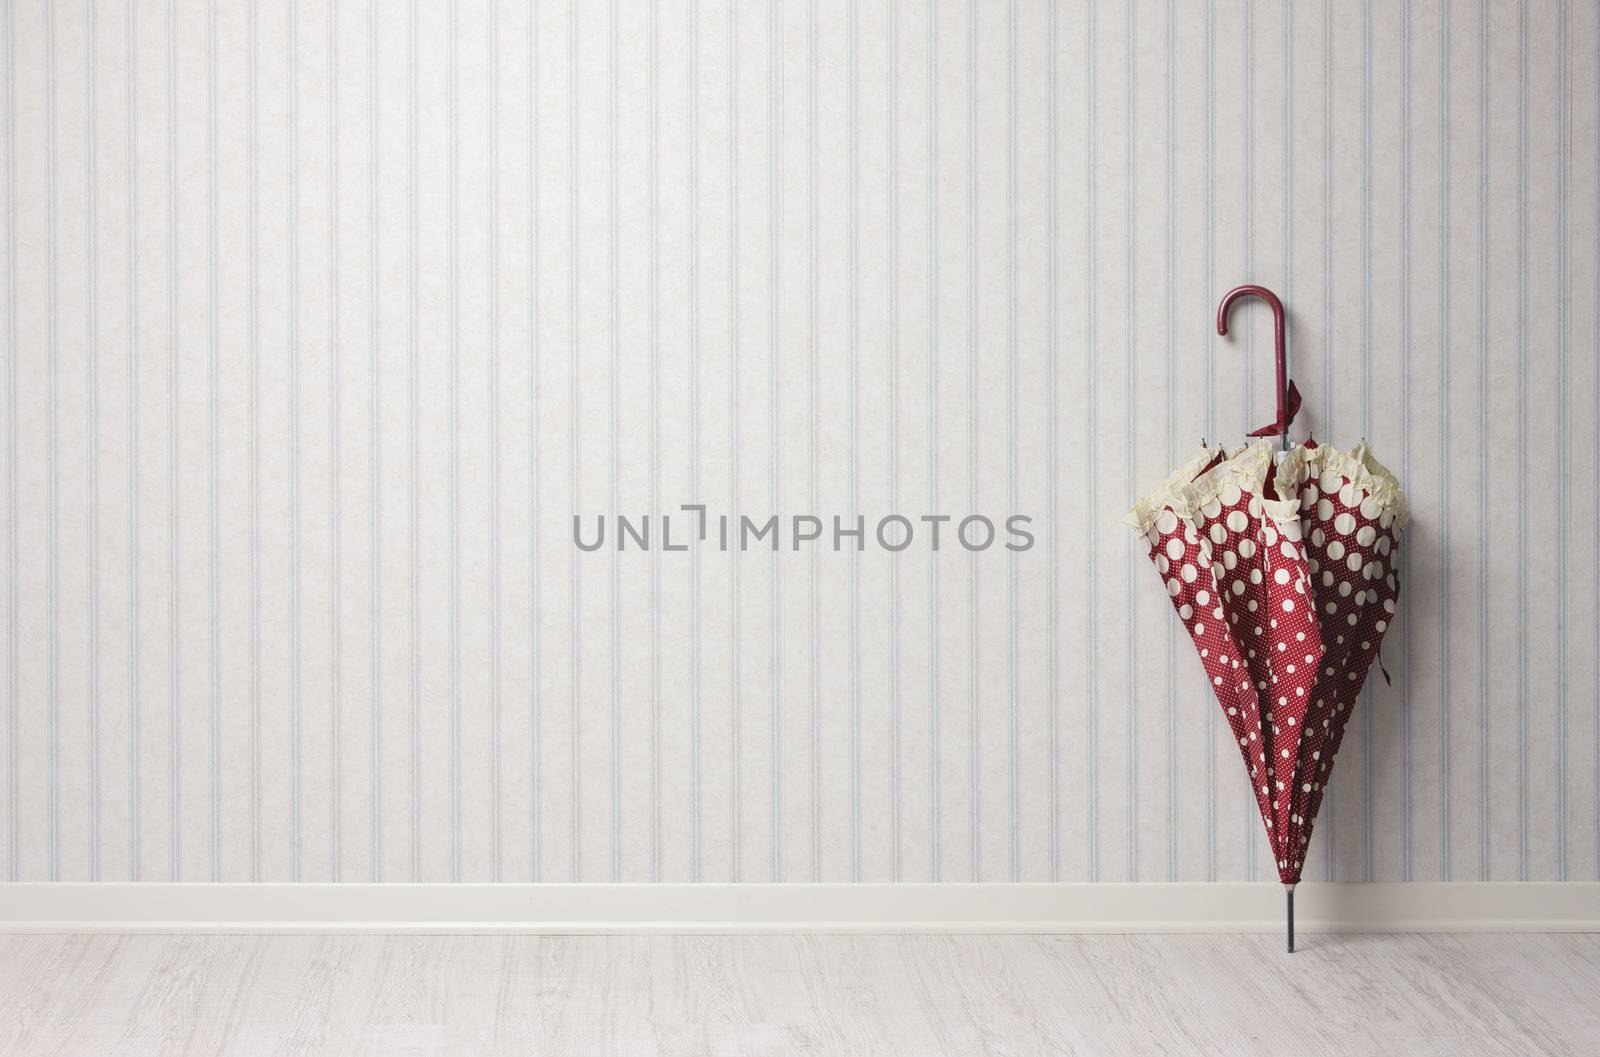 Umbrella in an empty room on vintage wallpaper